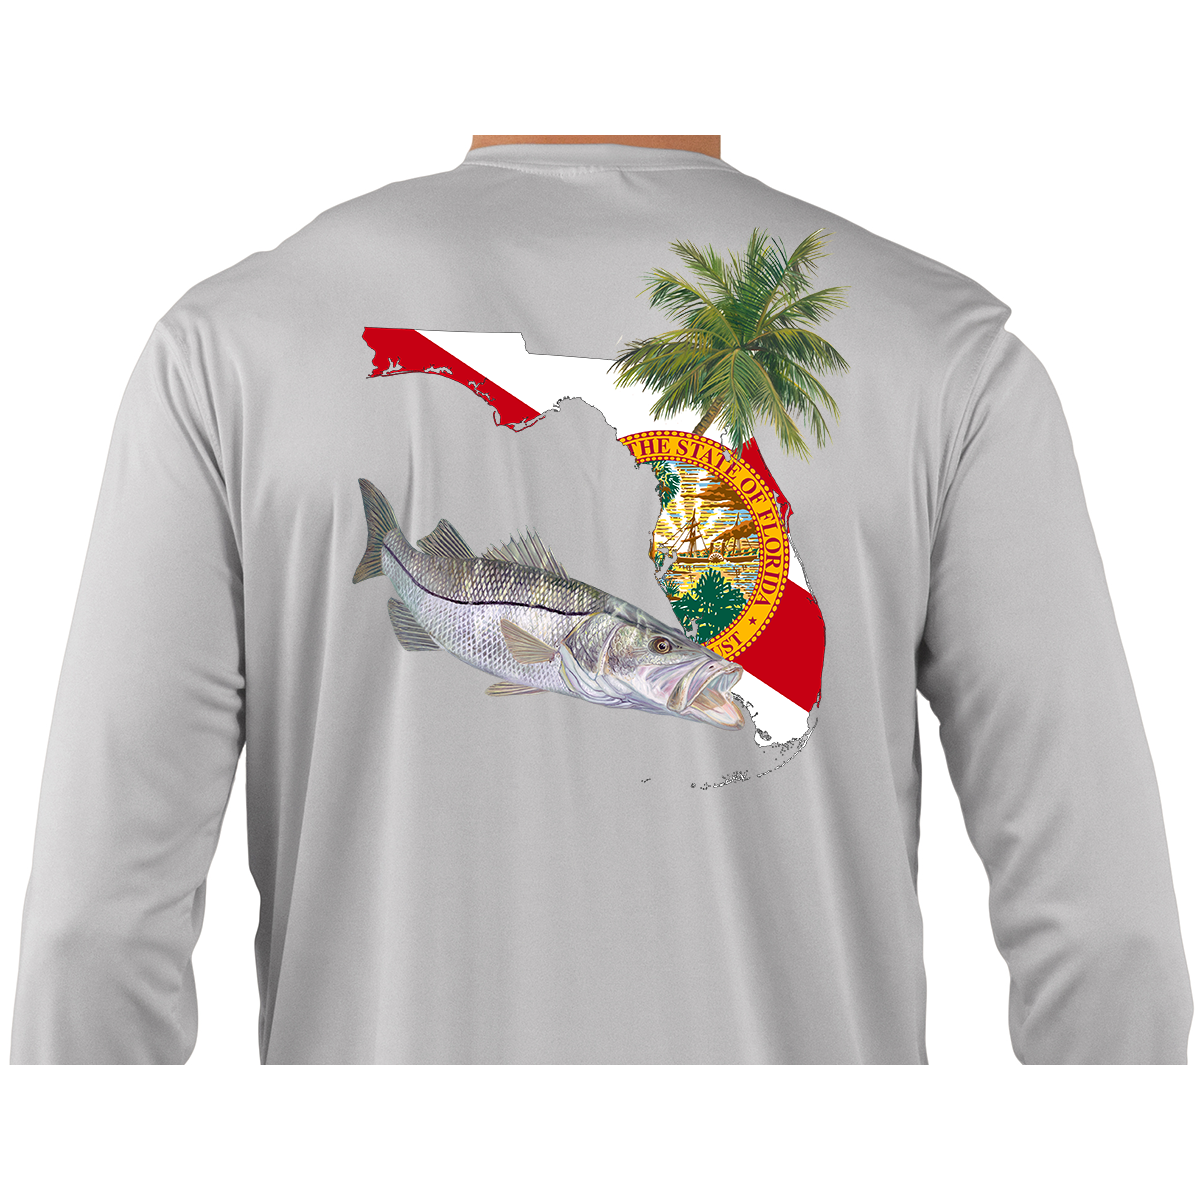 Florida Snook Long Sleeve Mens Fishing Shirt with Florida State